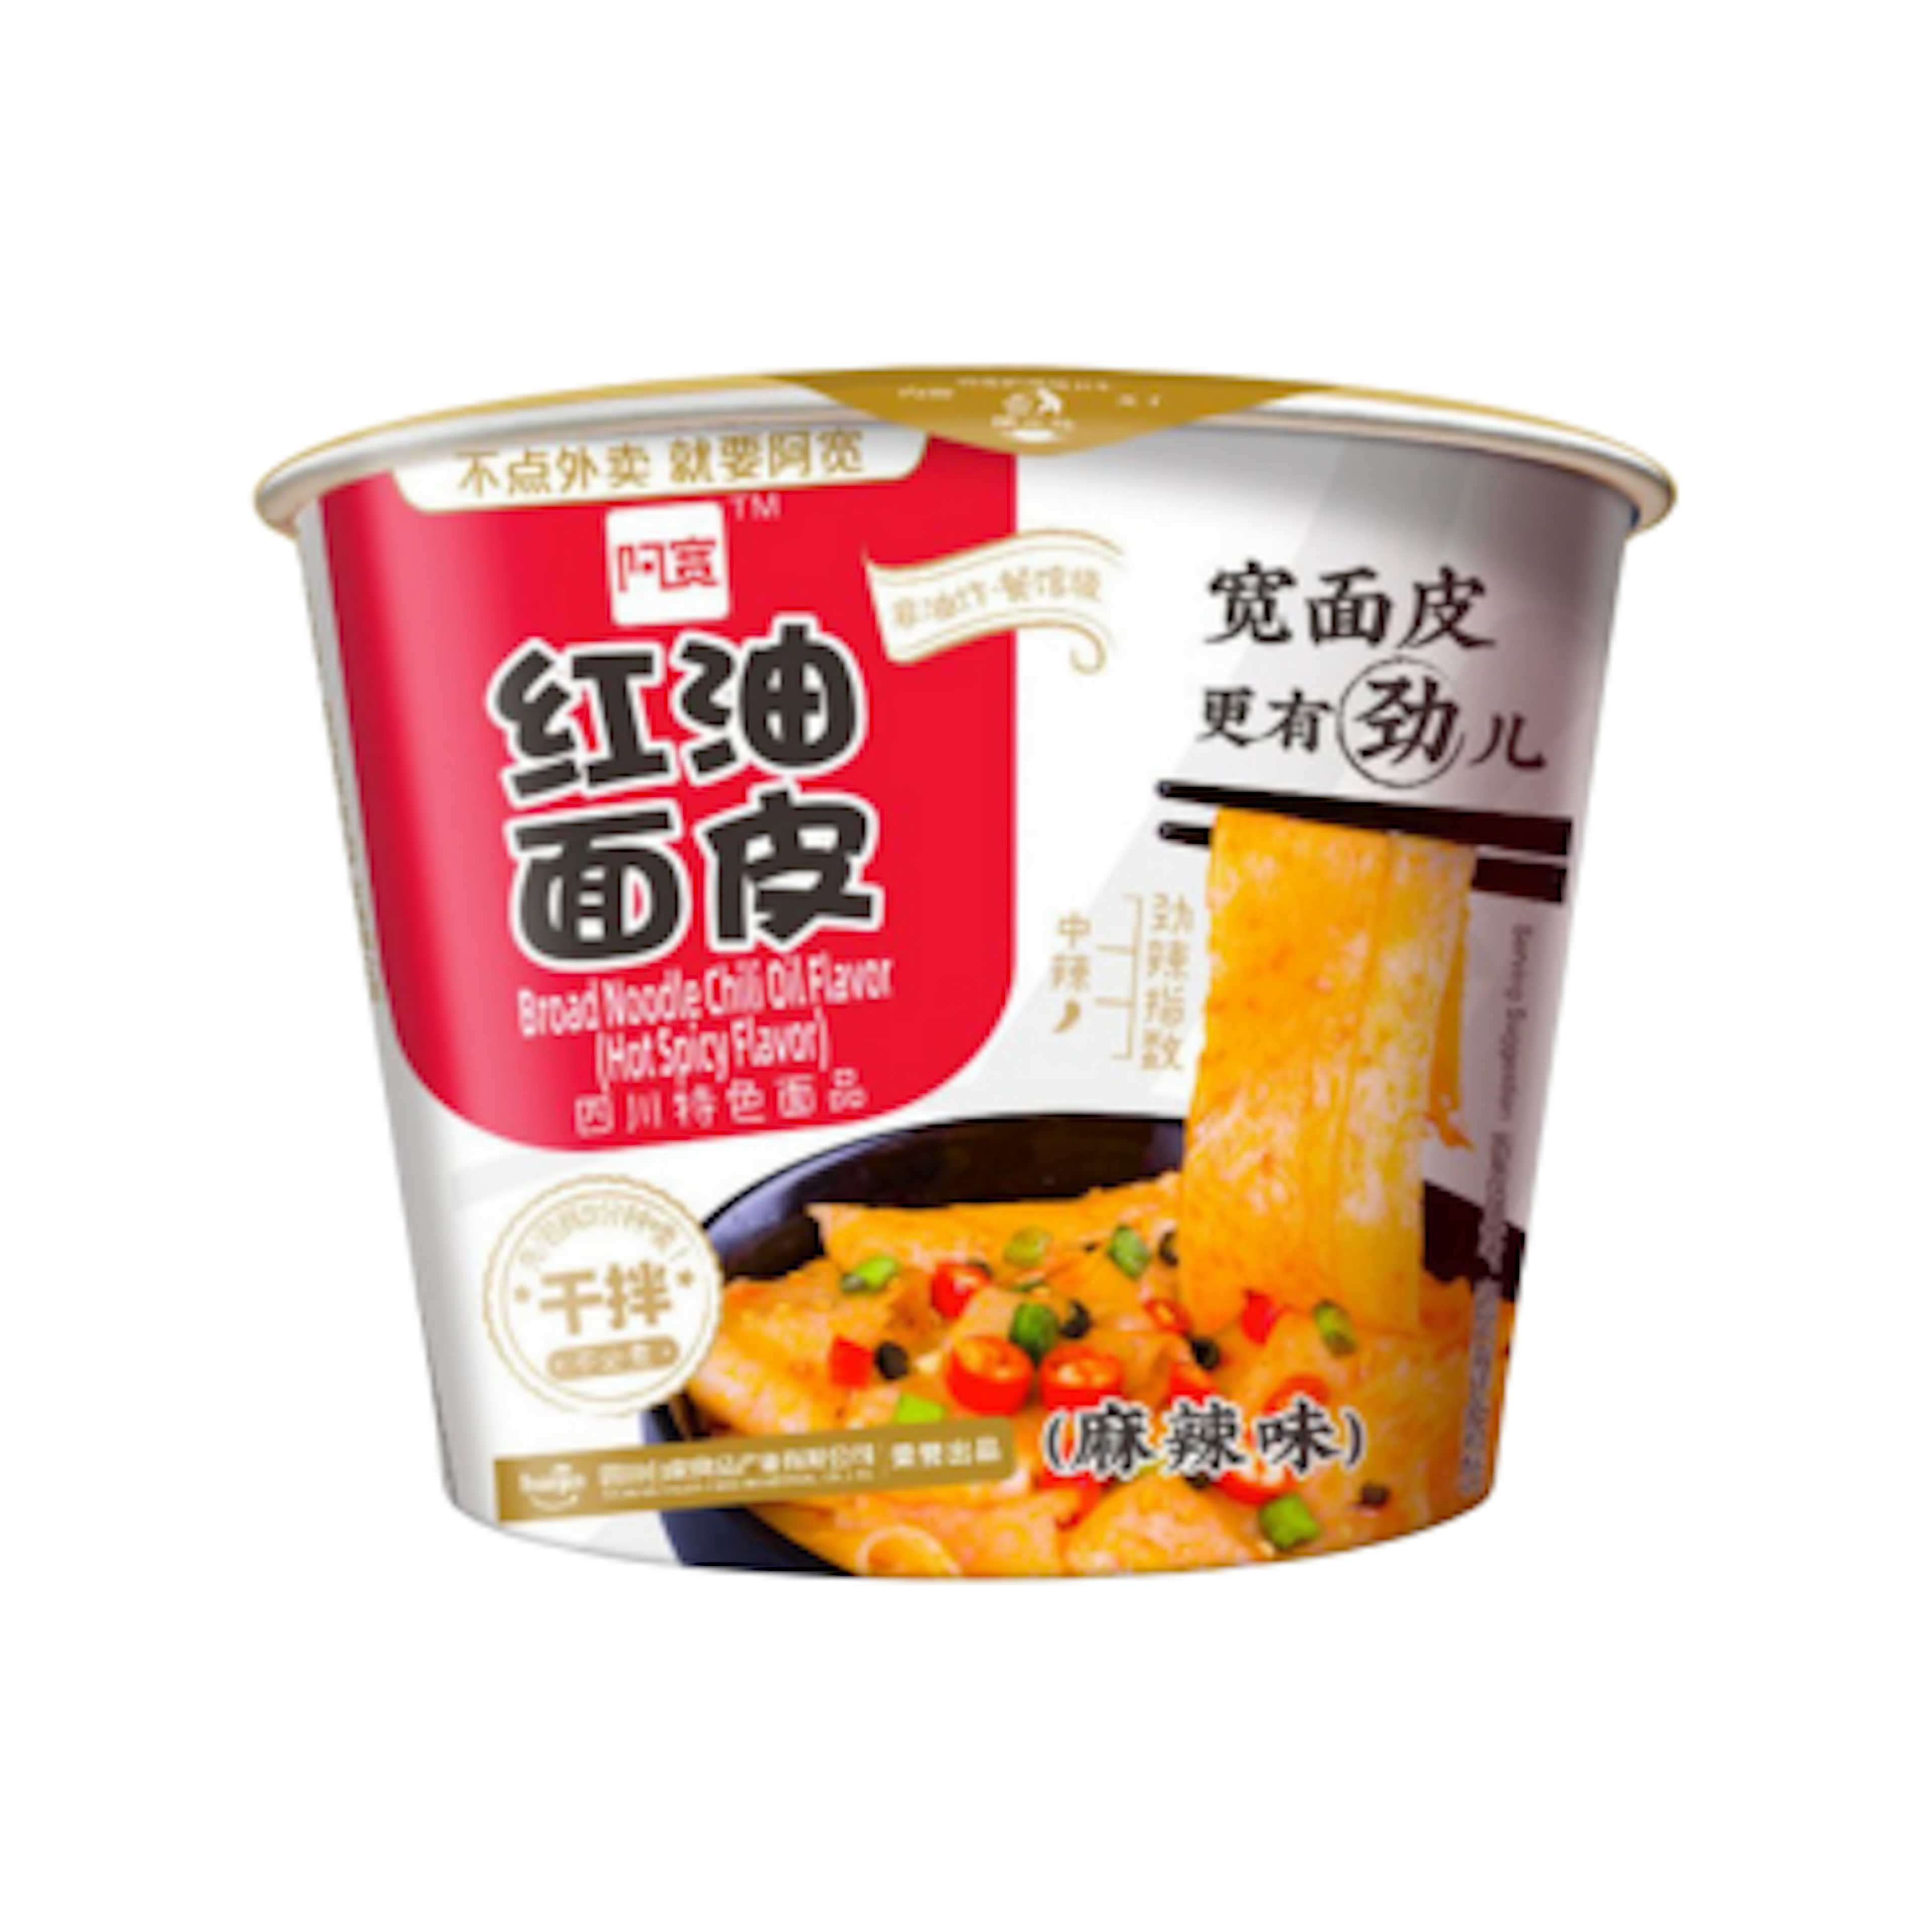 Baijia A-Kuan Broad Noodle Chili Oil Flavor - Würzige und breite Nudeln, 110g